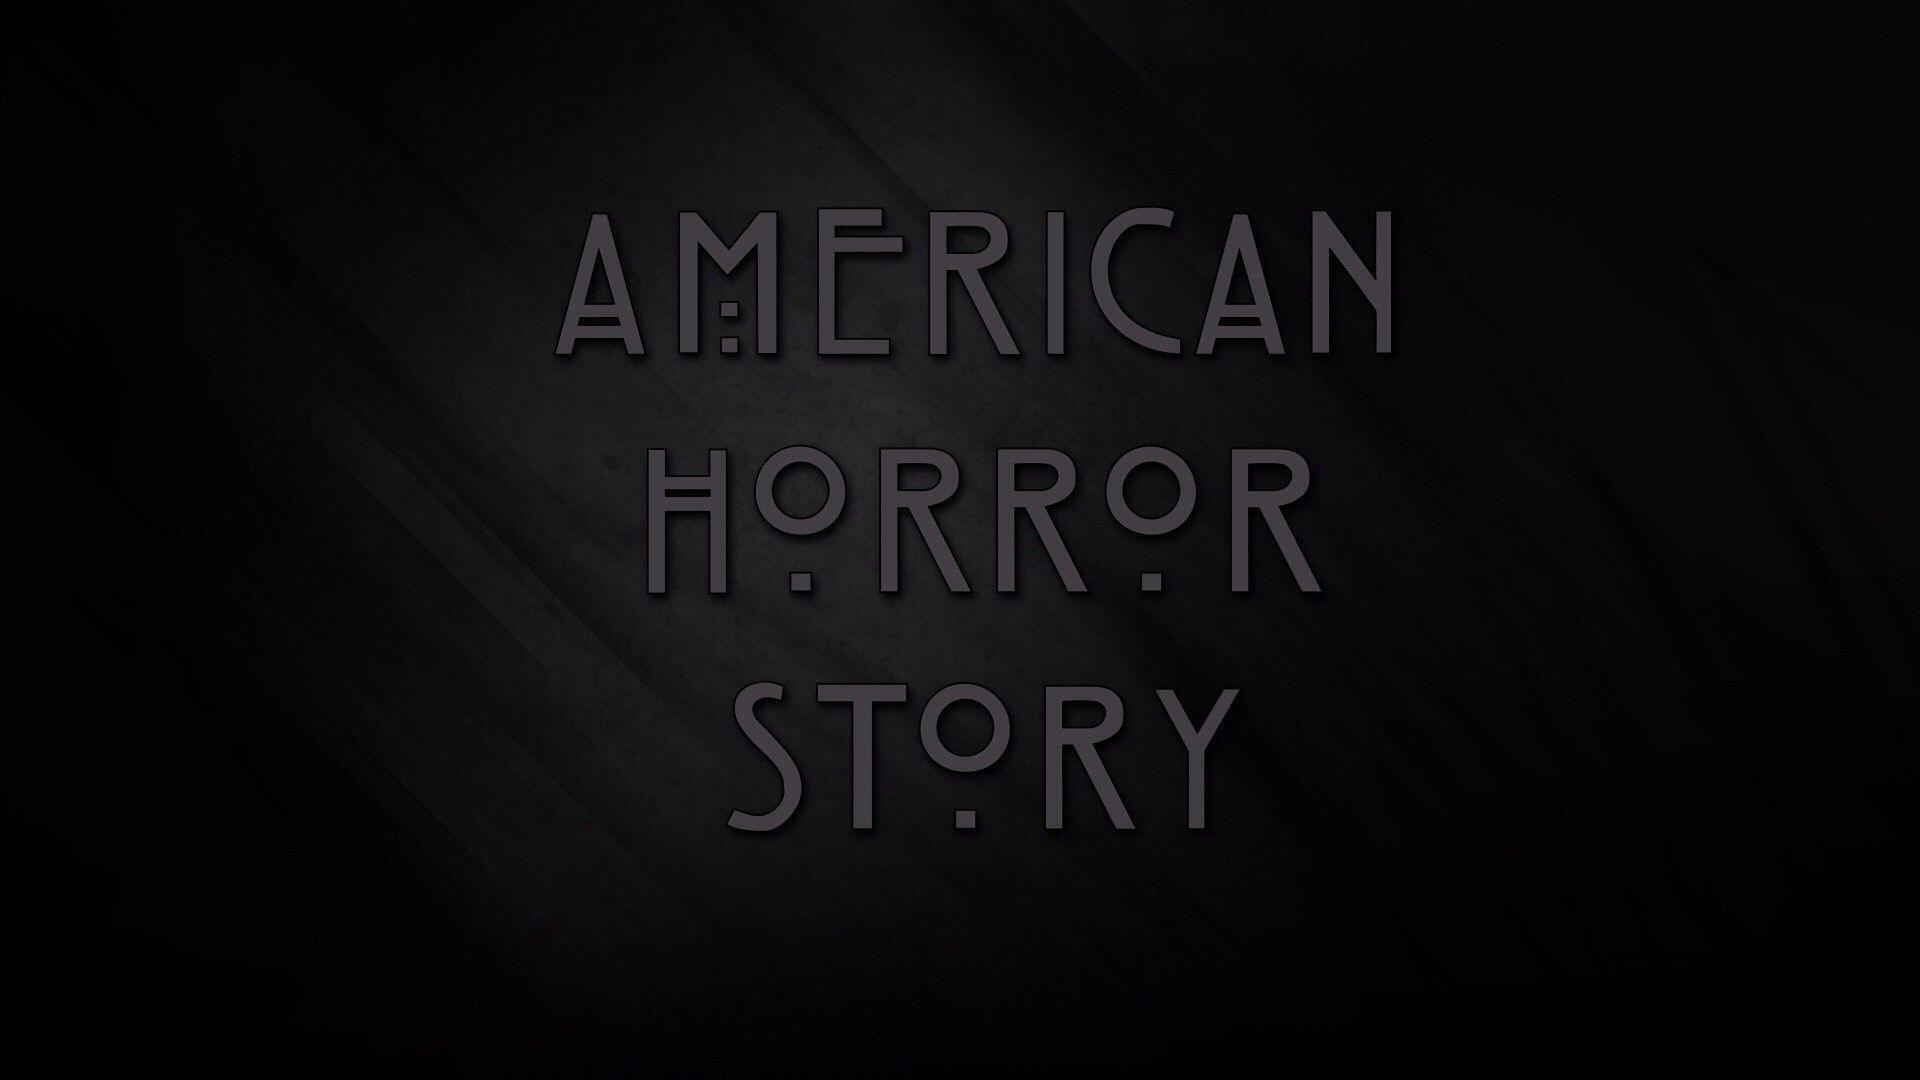 American Horror Story iPhone Wallpaper